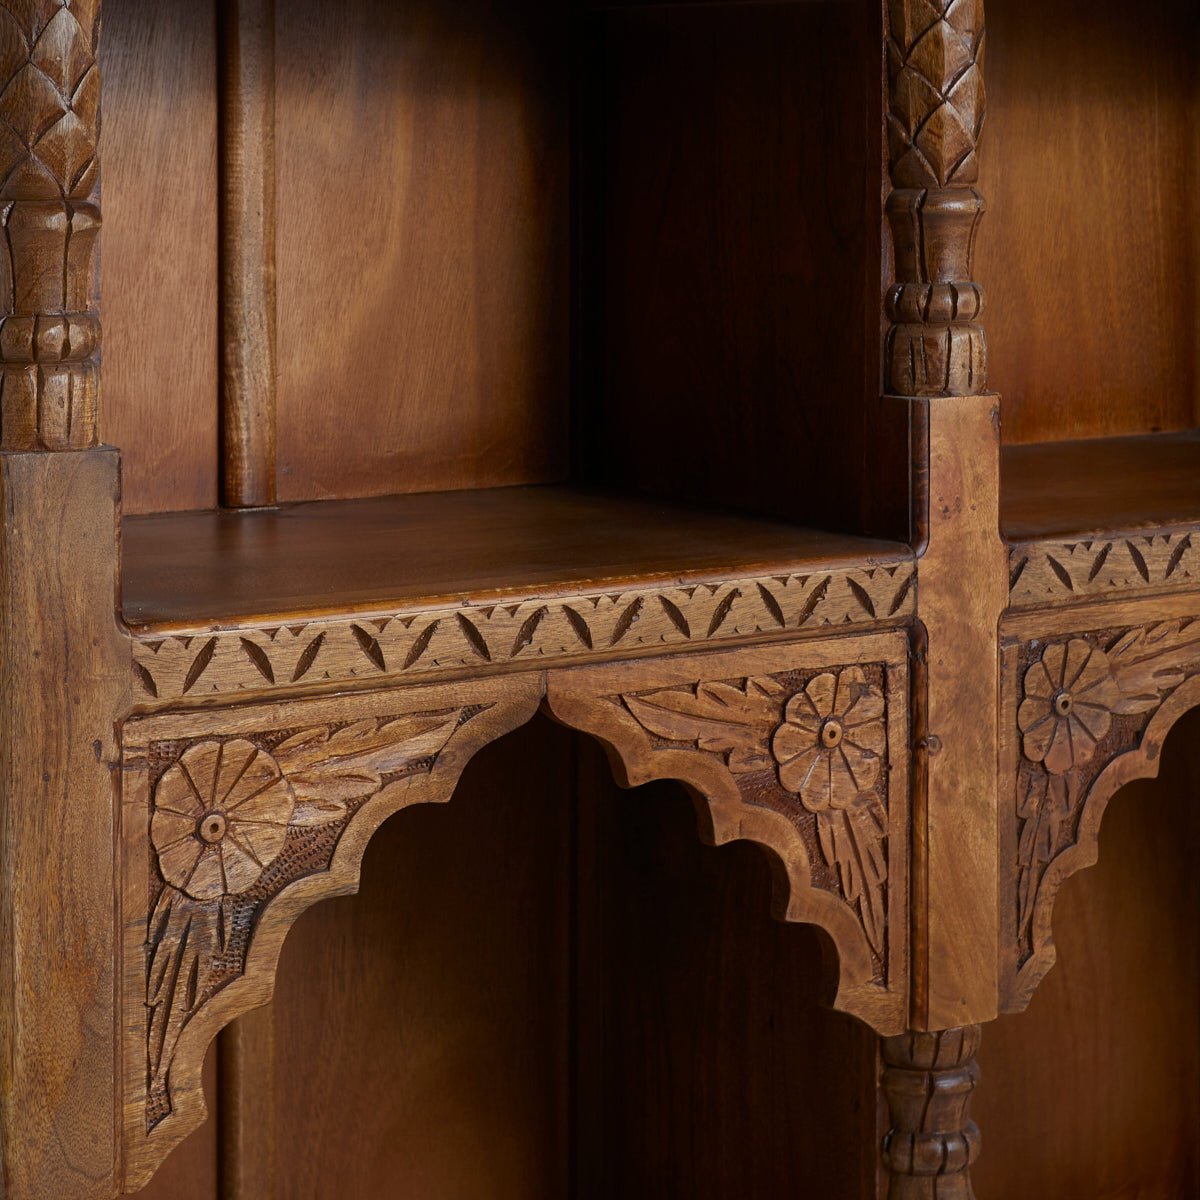 Close-up view of Jaipur Bookshelf